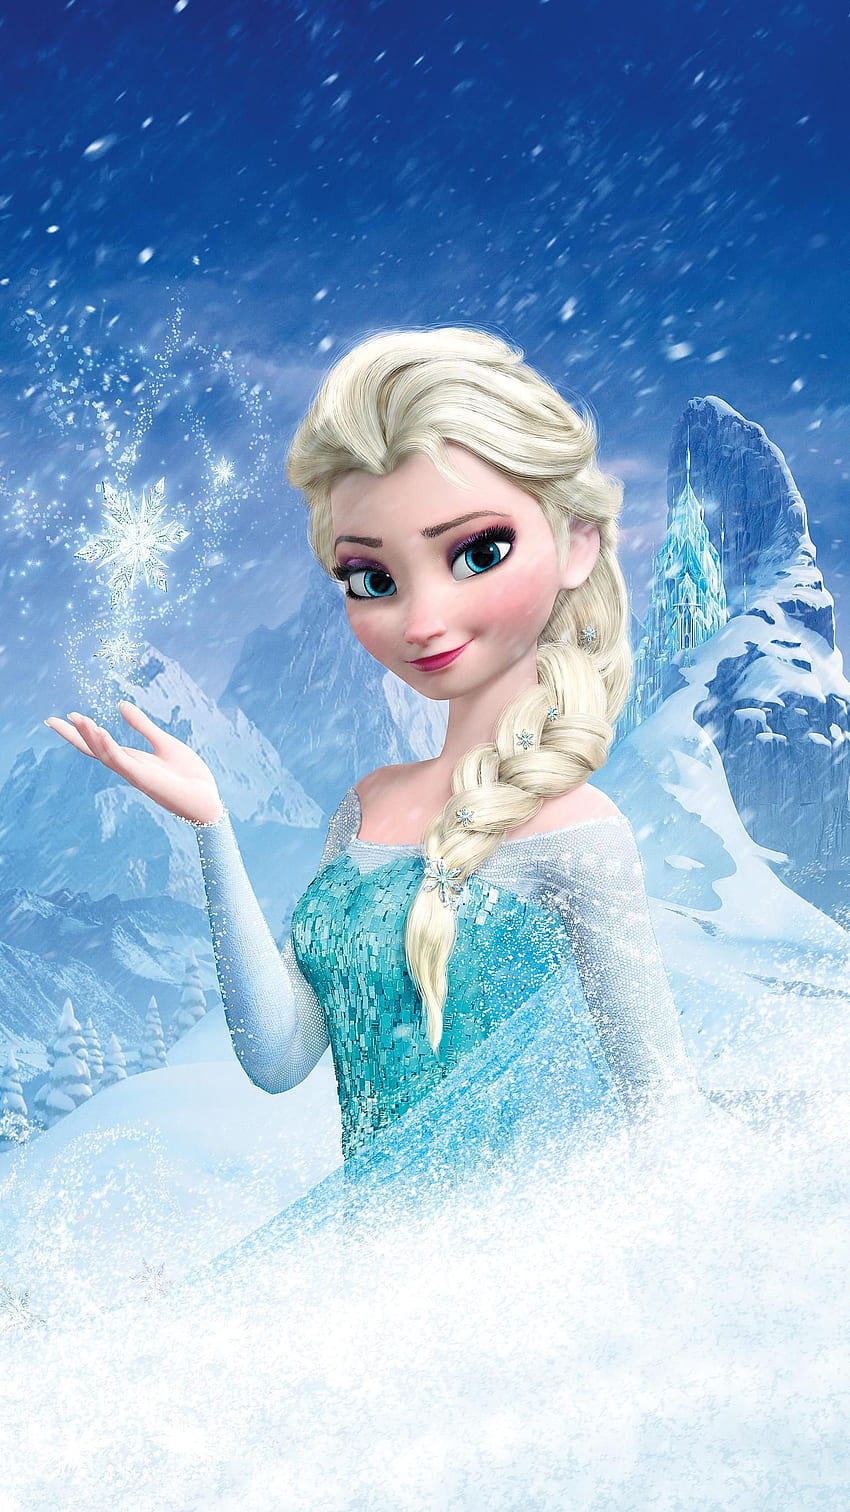 Frozen (2013) Phone . Moviemania. Disney frozen elsa art, Frozen poster, Frozen HD phone wallpaper